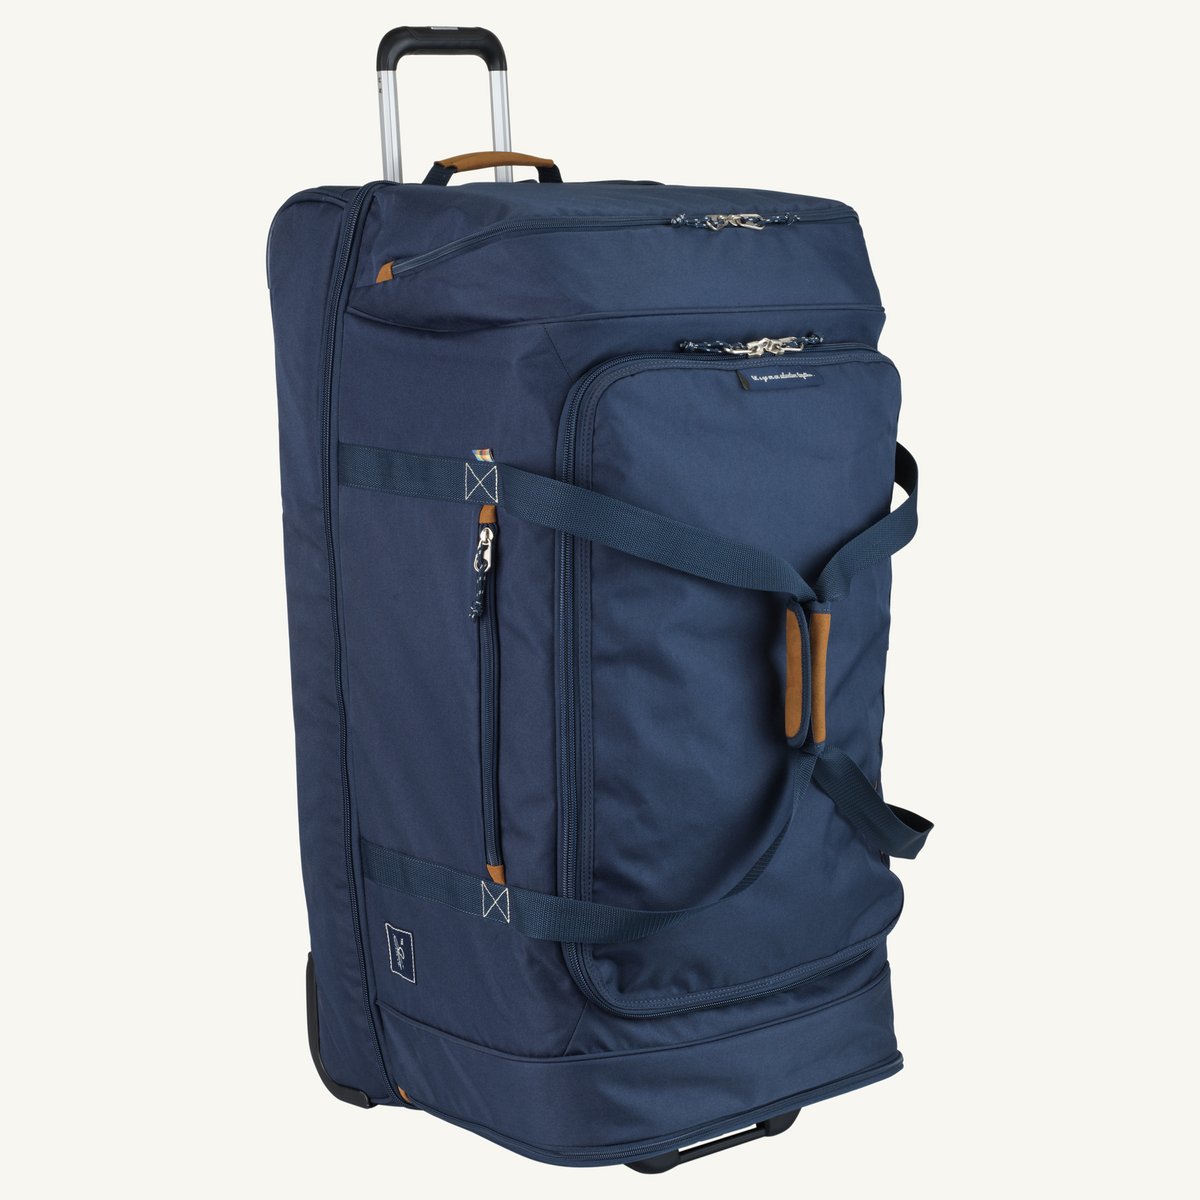 best size rolling adventure bag llbean for flights